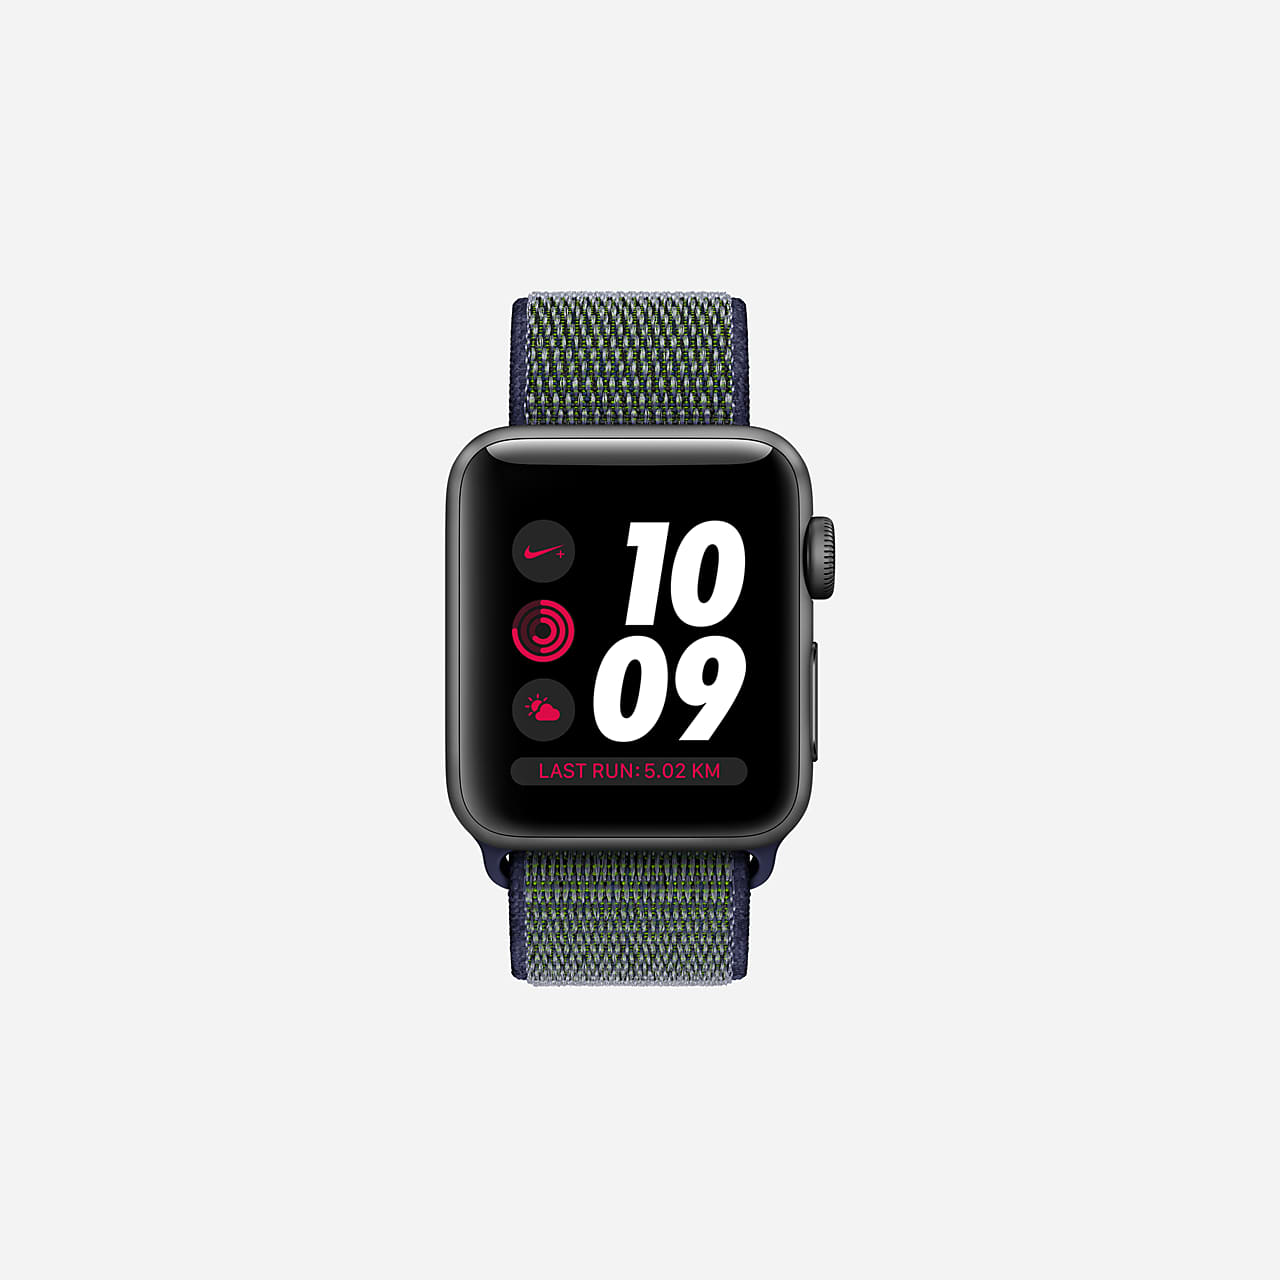 Apple Watch Nike+ Series 3 (GPS + Cellular) 38mm Open Box Running Watch